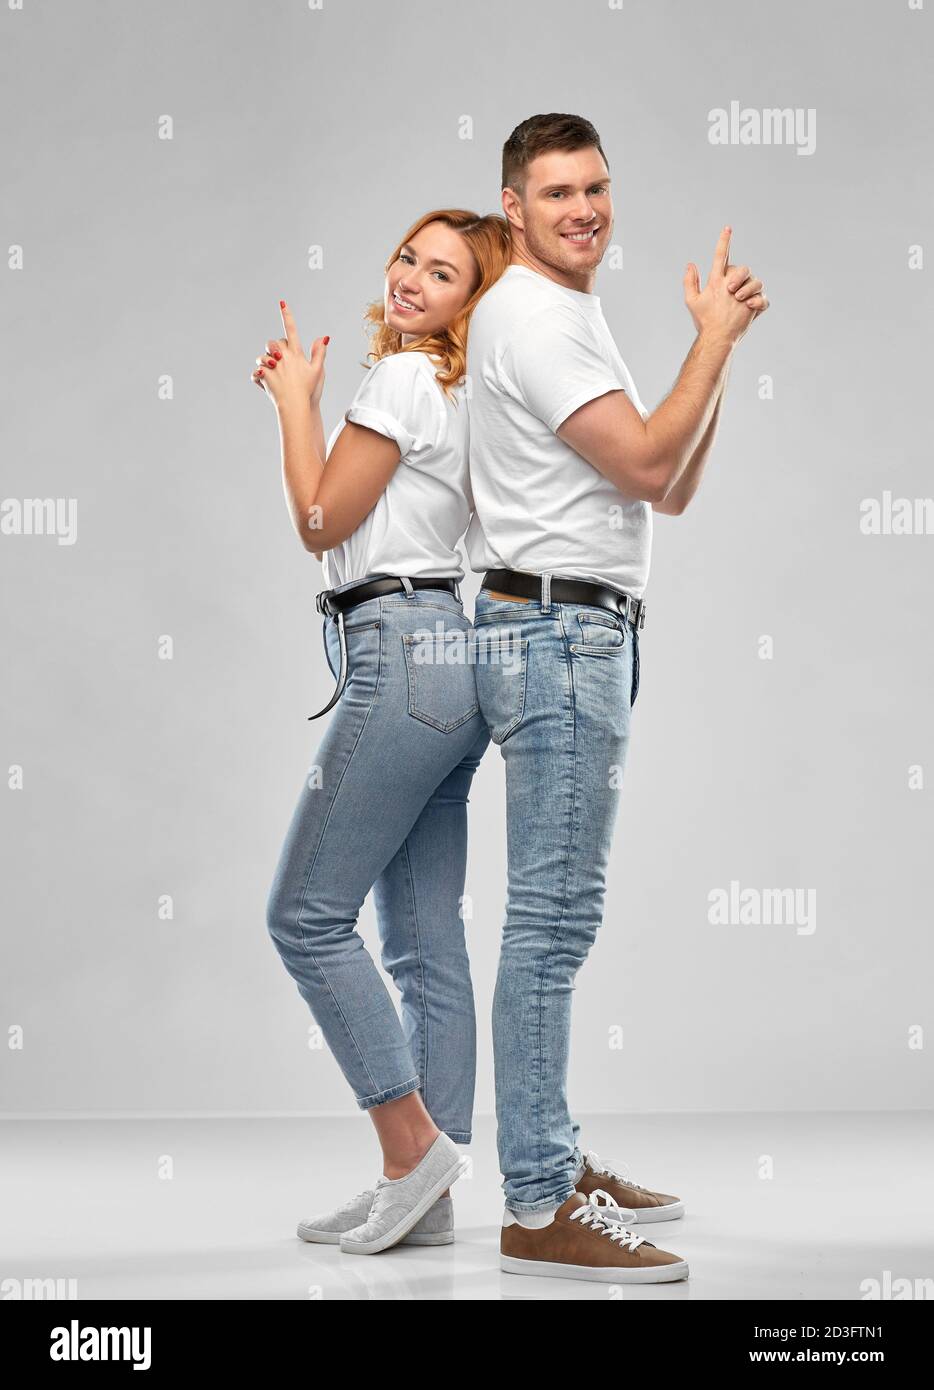 couple in white t-shirts shirts making gun gesture Stock Photo